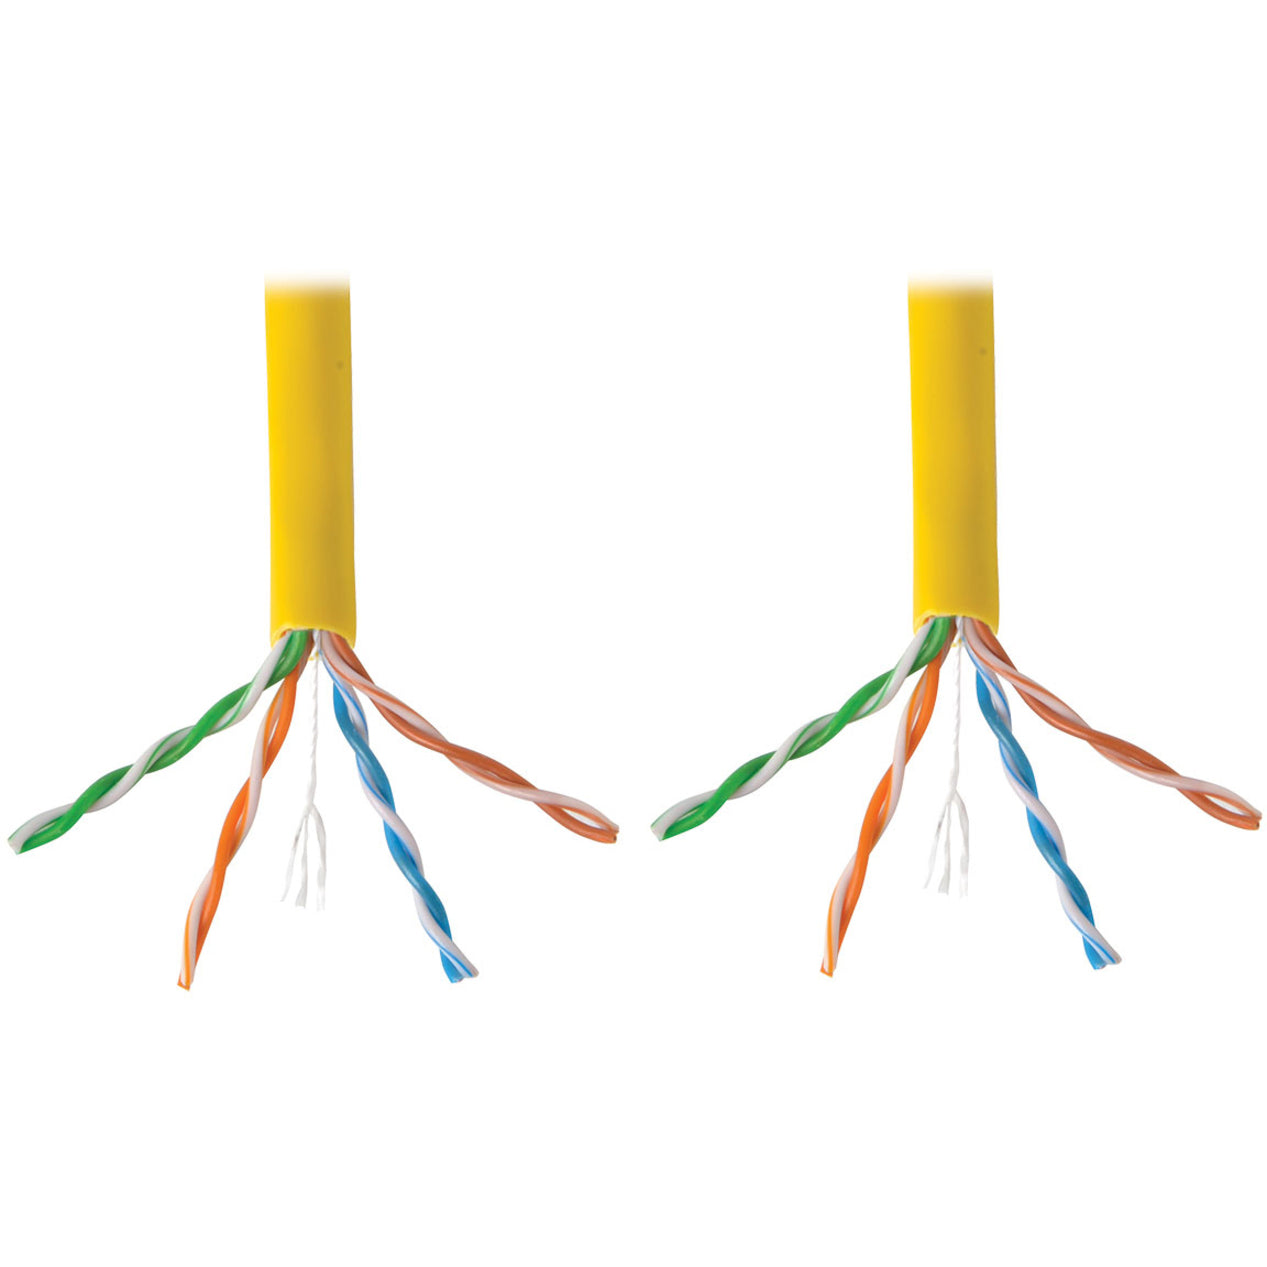 Tripp Lite N222-01K-YW Cat6 Gigabit Bulk Solid-Core PVC Cable, Yellow, 1000 ft